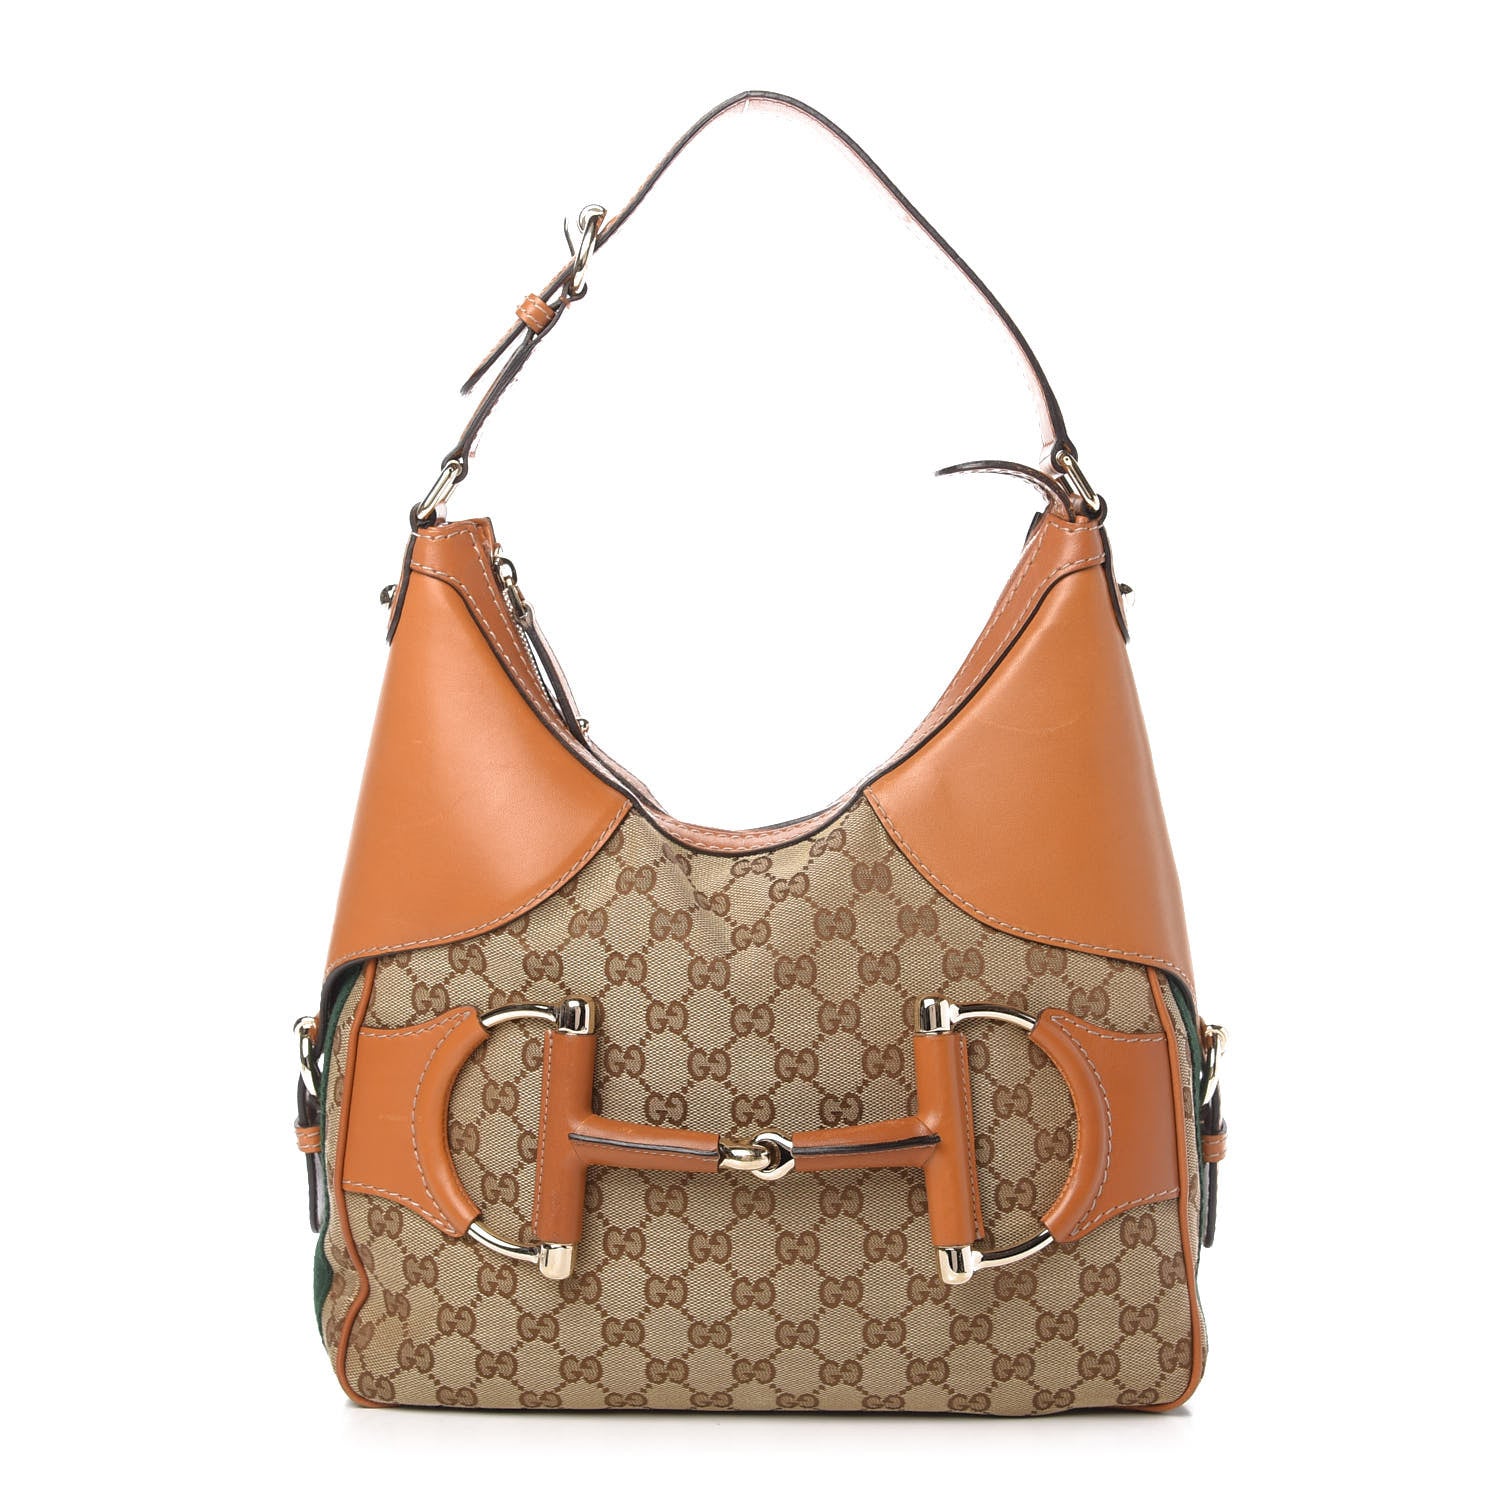 Gucci, Bags, Authentic Gucci Heritage Hobo Handbag